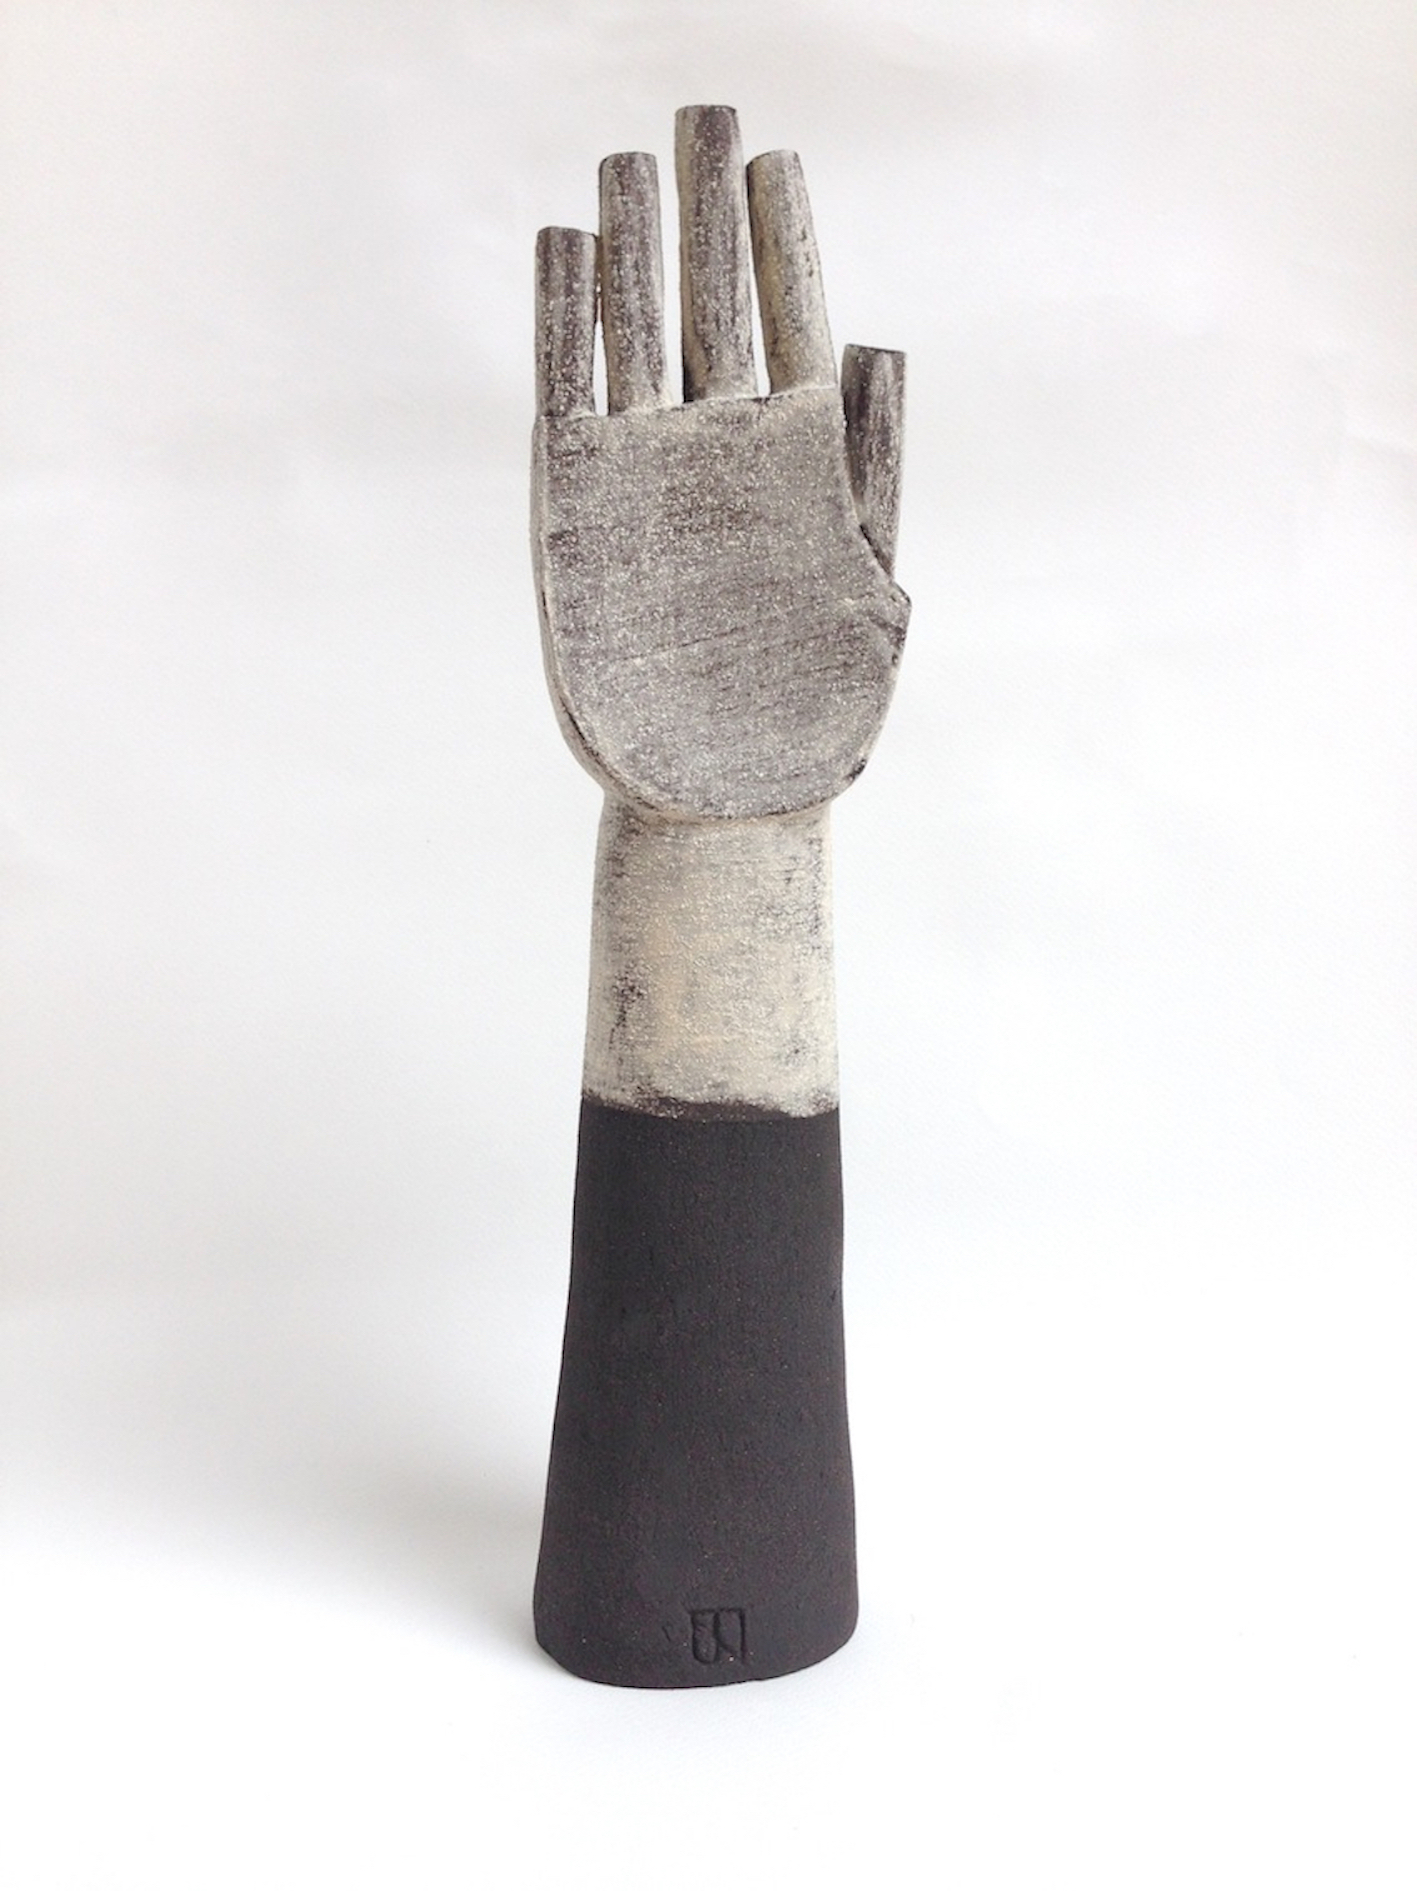  Title: White Glove Size: H 35 x W 12 x D 9 cm Medium: Black stoneware 